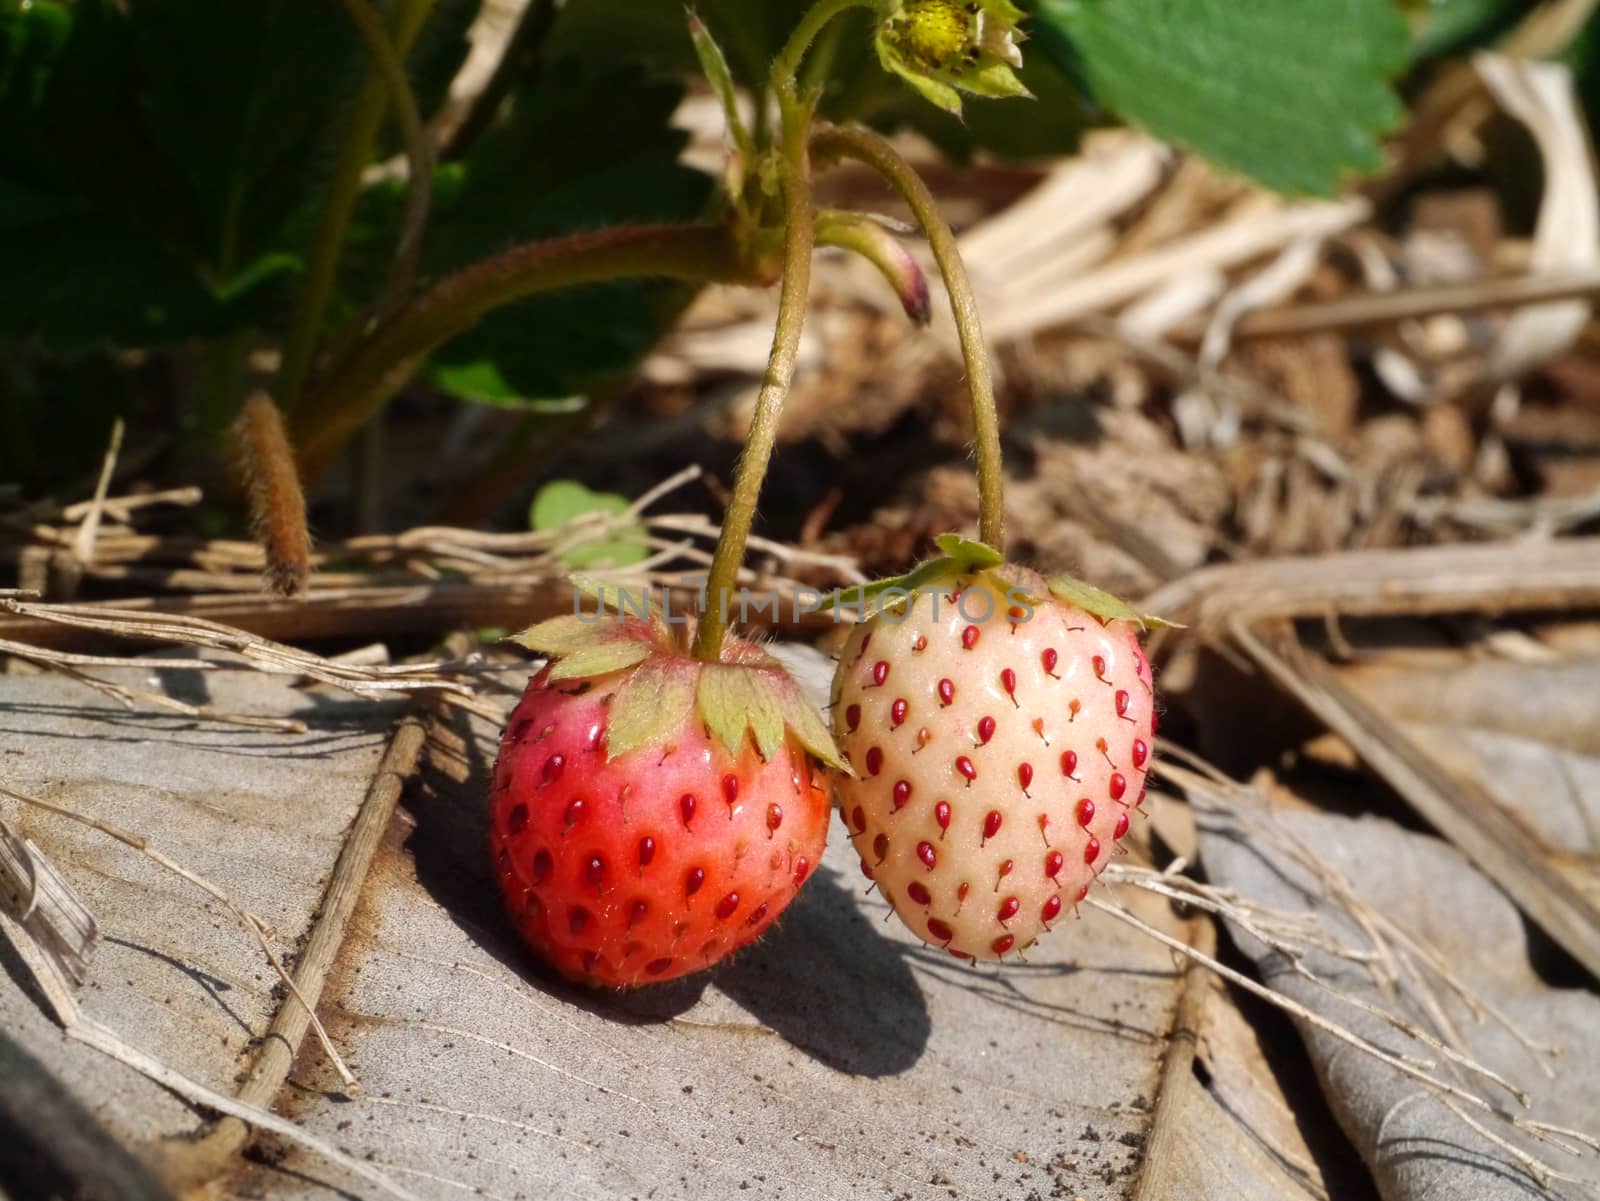 strawberry in farm by Noppharat_th